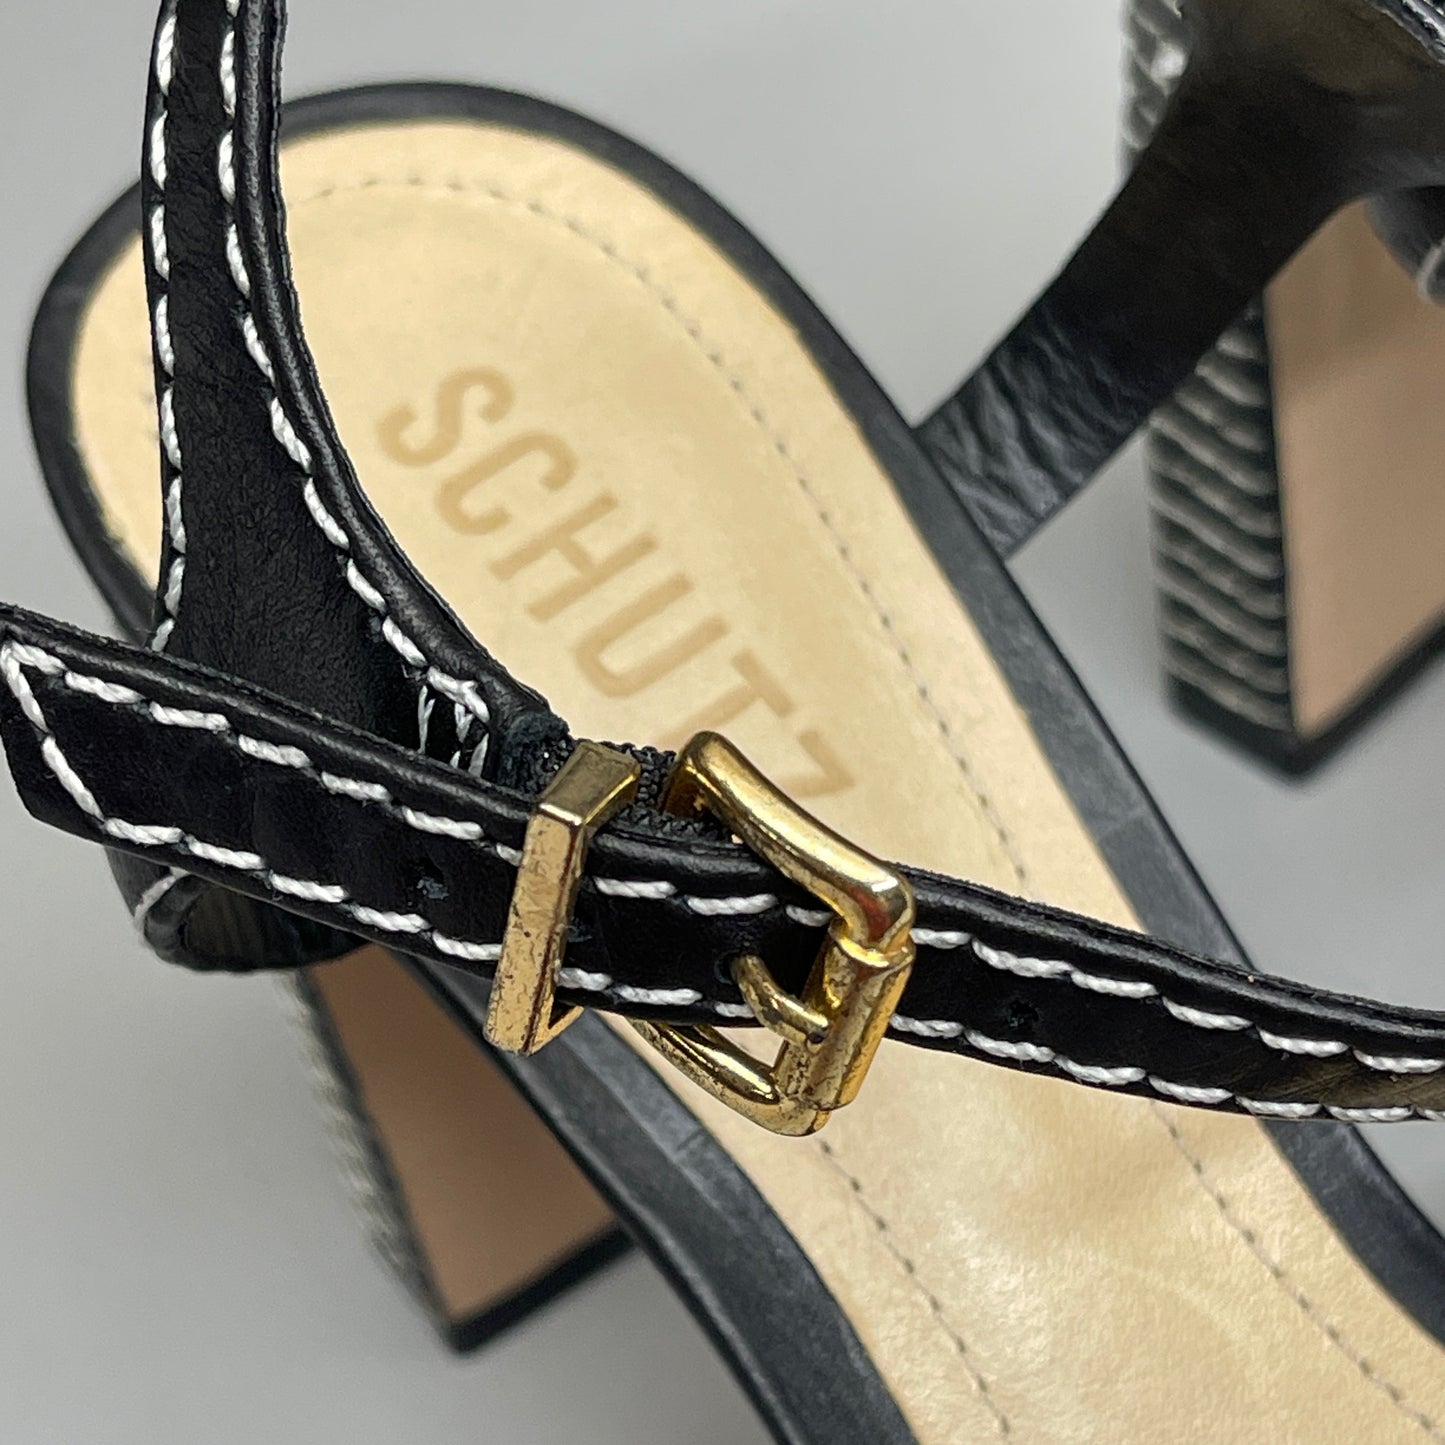 SCHUTZ Keefa Casual Women's Leather Sandal Black Platform 4" Heel Shoes Sz 11B (New)